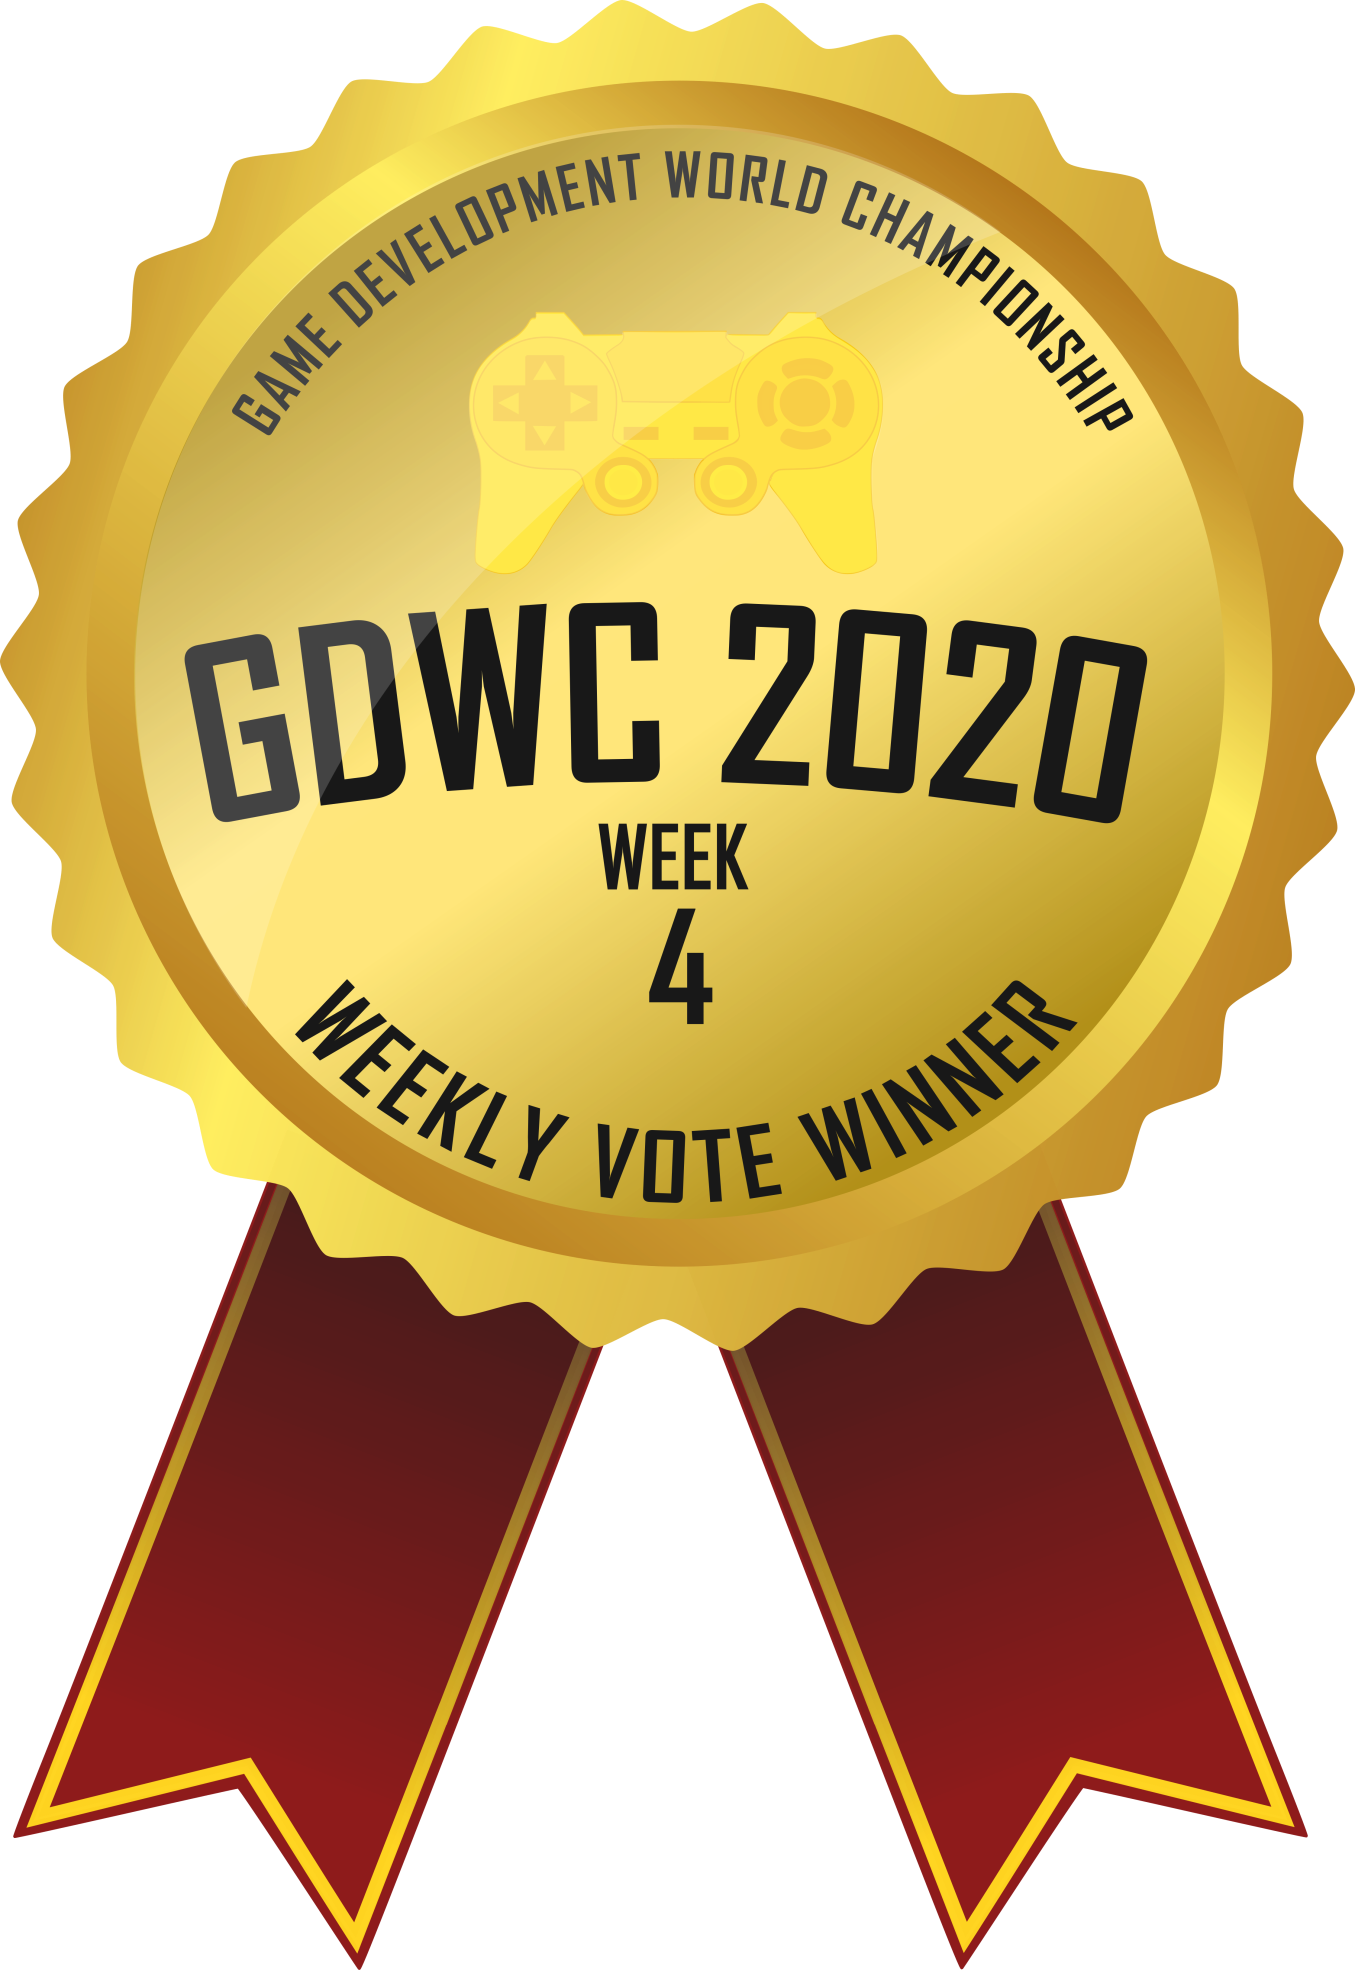 gdwc weekly vote